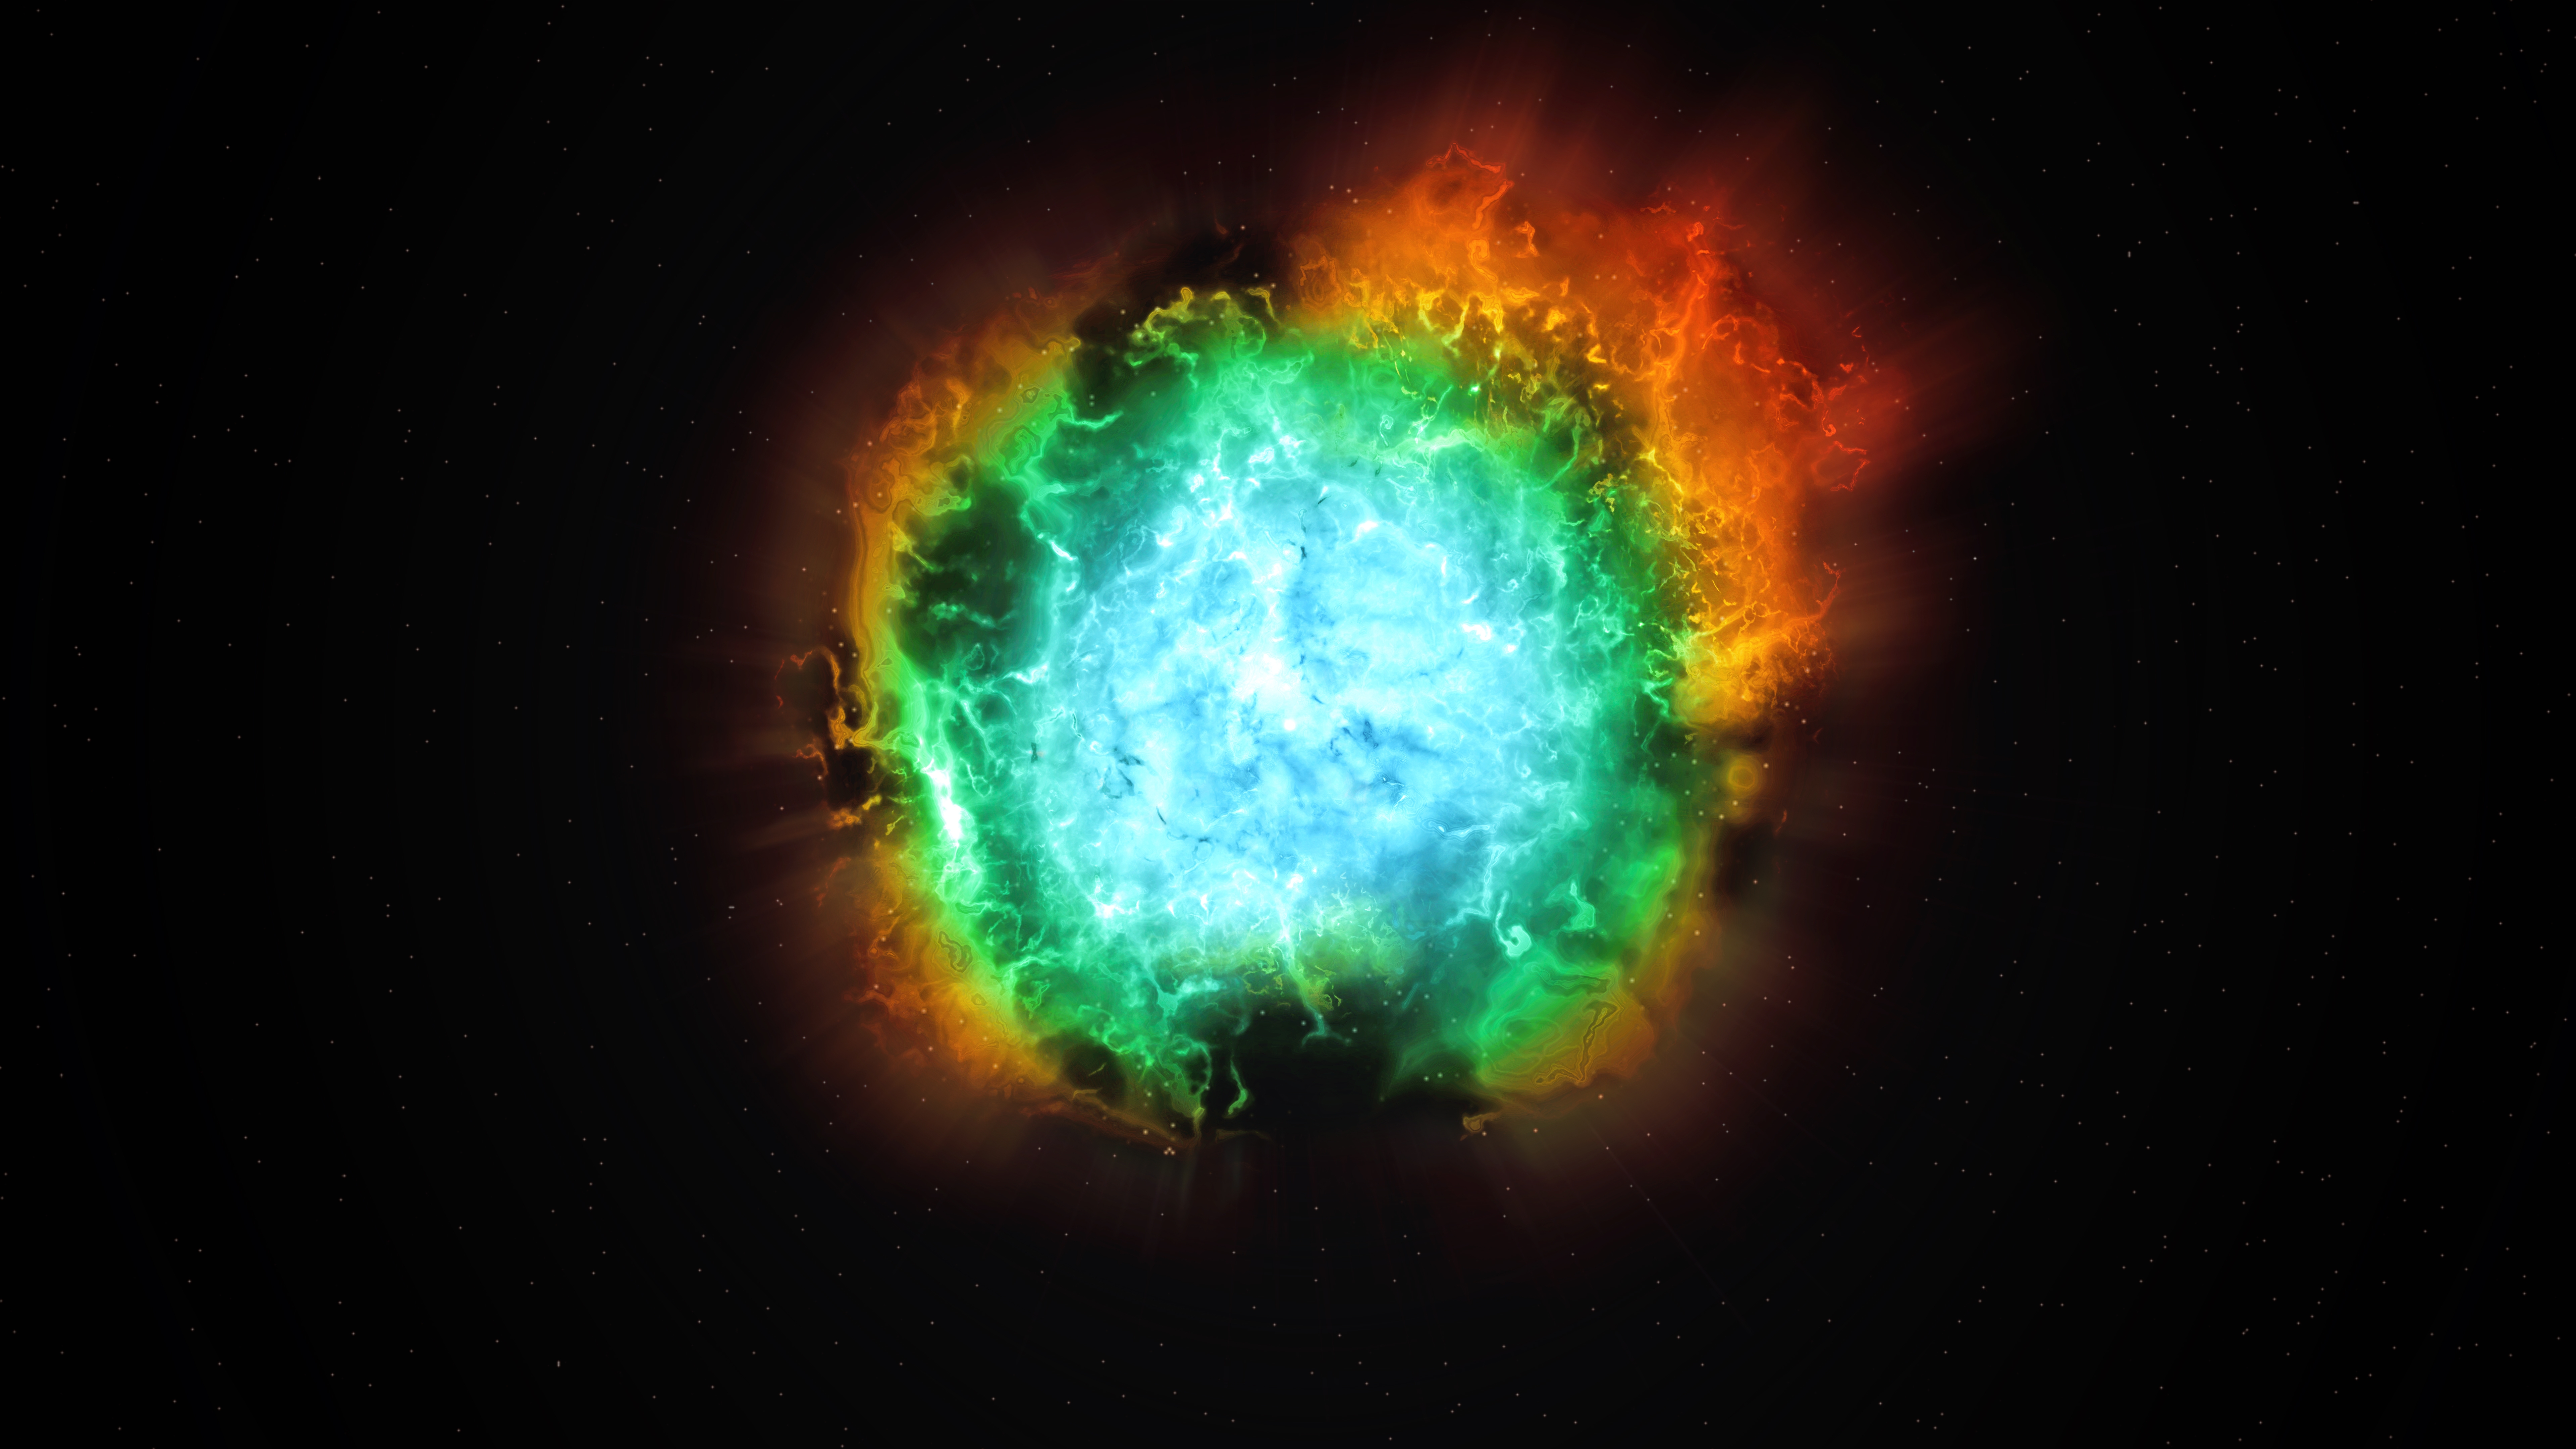 HD wallpaper, Nuclear Fusion, 8K, Astronomical, Supernova, Deep Space, 5K, Stellar Explosions